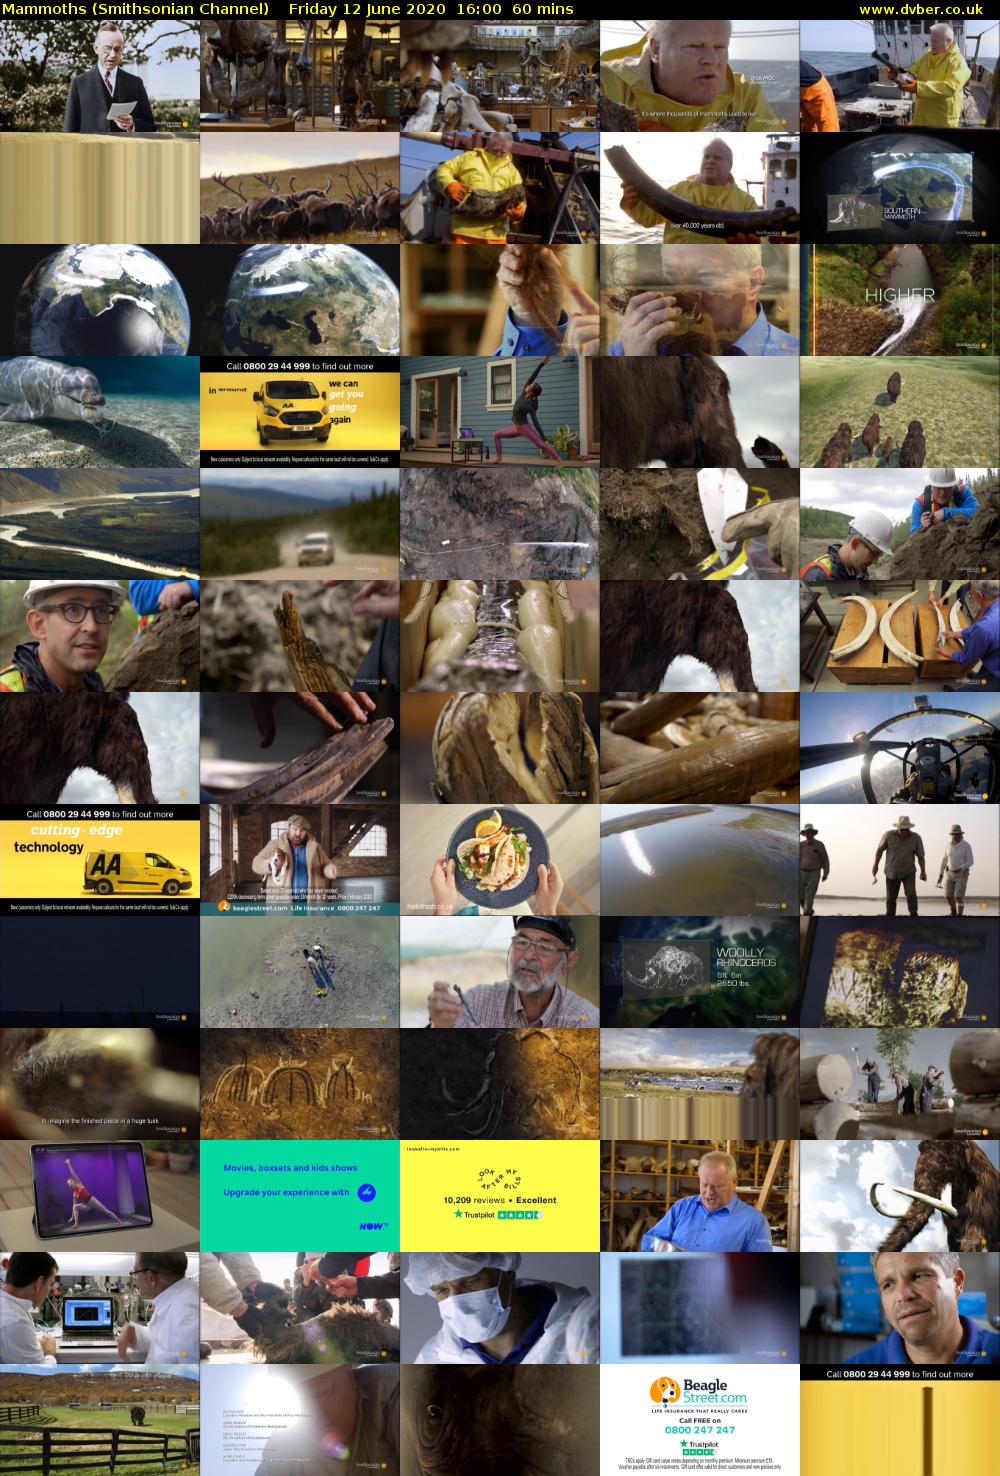 Mammoths (Smithsonian Channel) Friday 12 June 2020 16:00 - 17:00